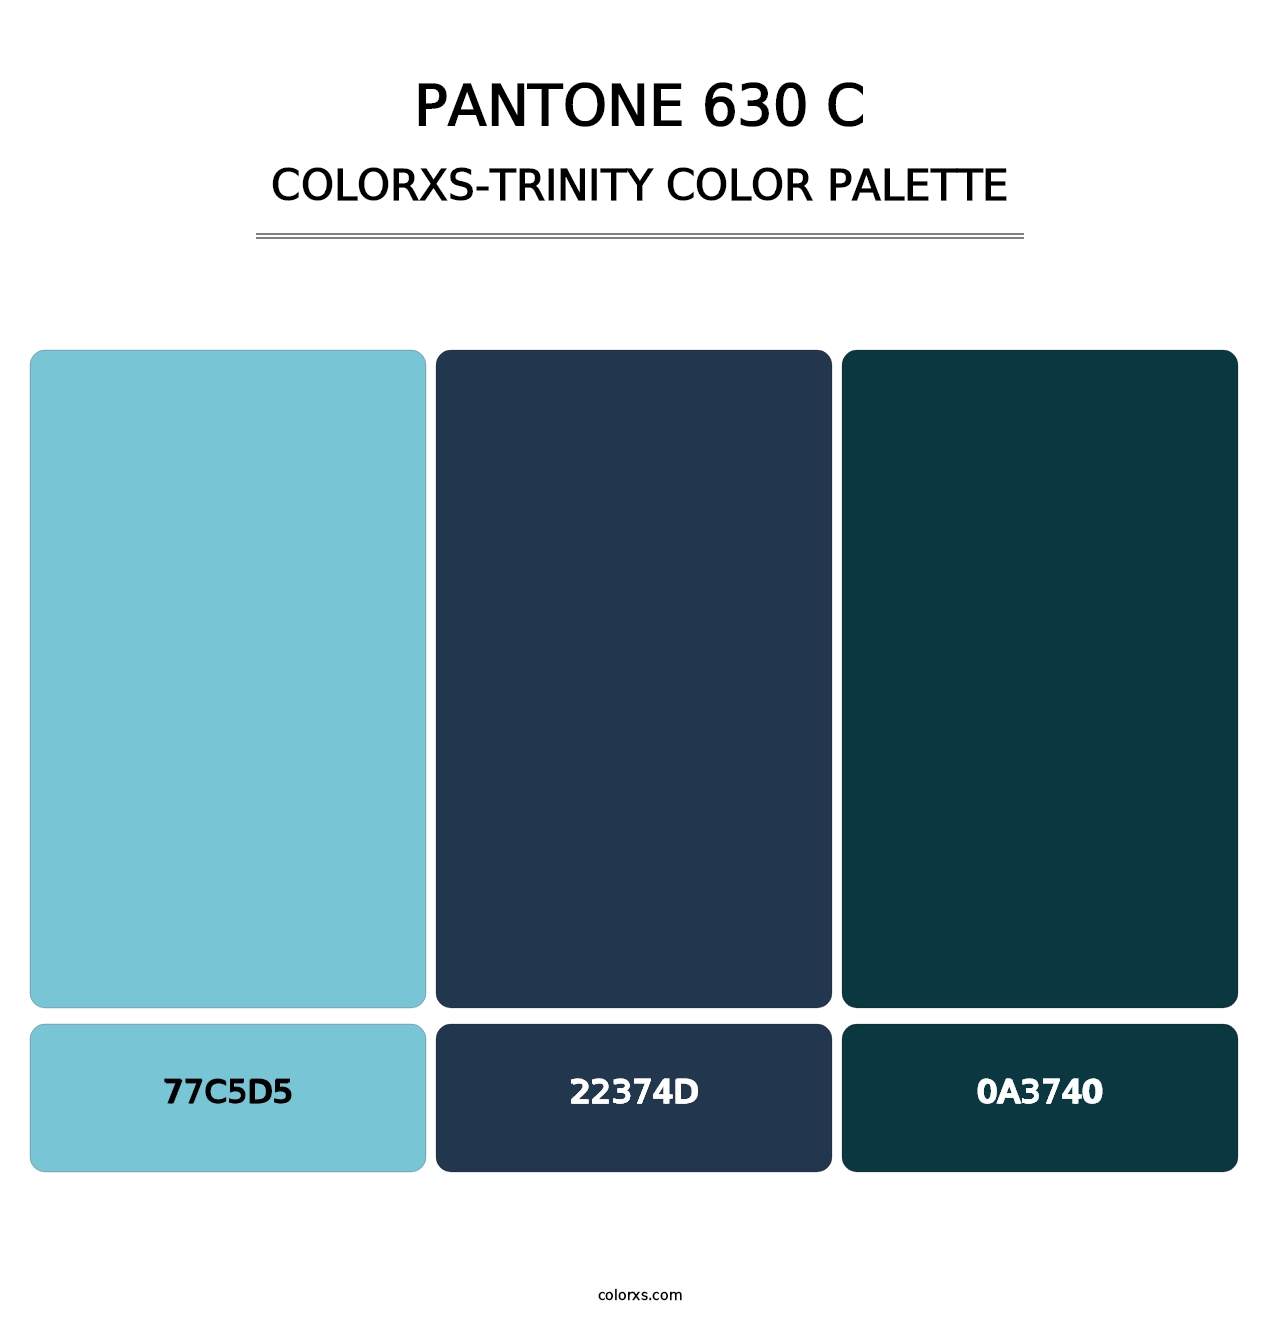 PANTONE 630 C - Colorxs Trinity Palette